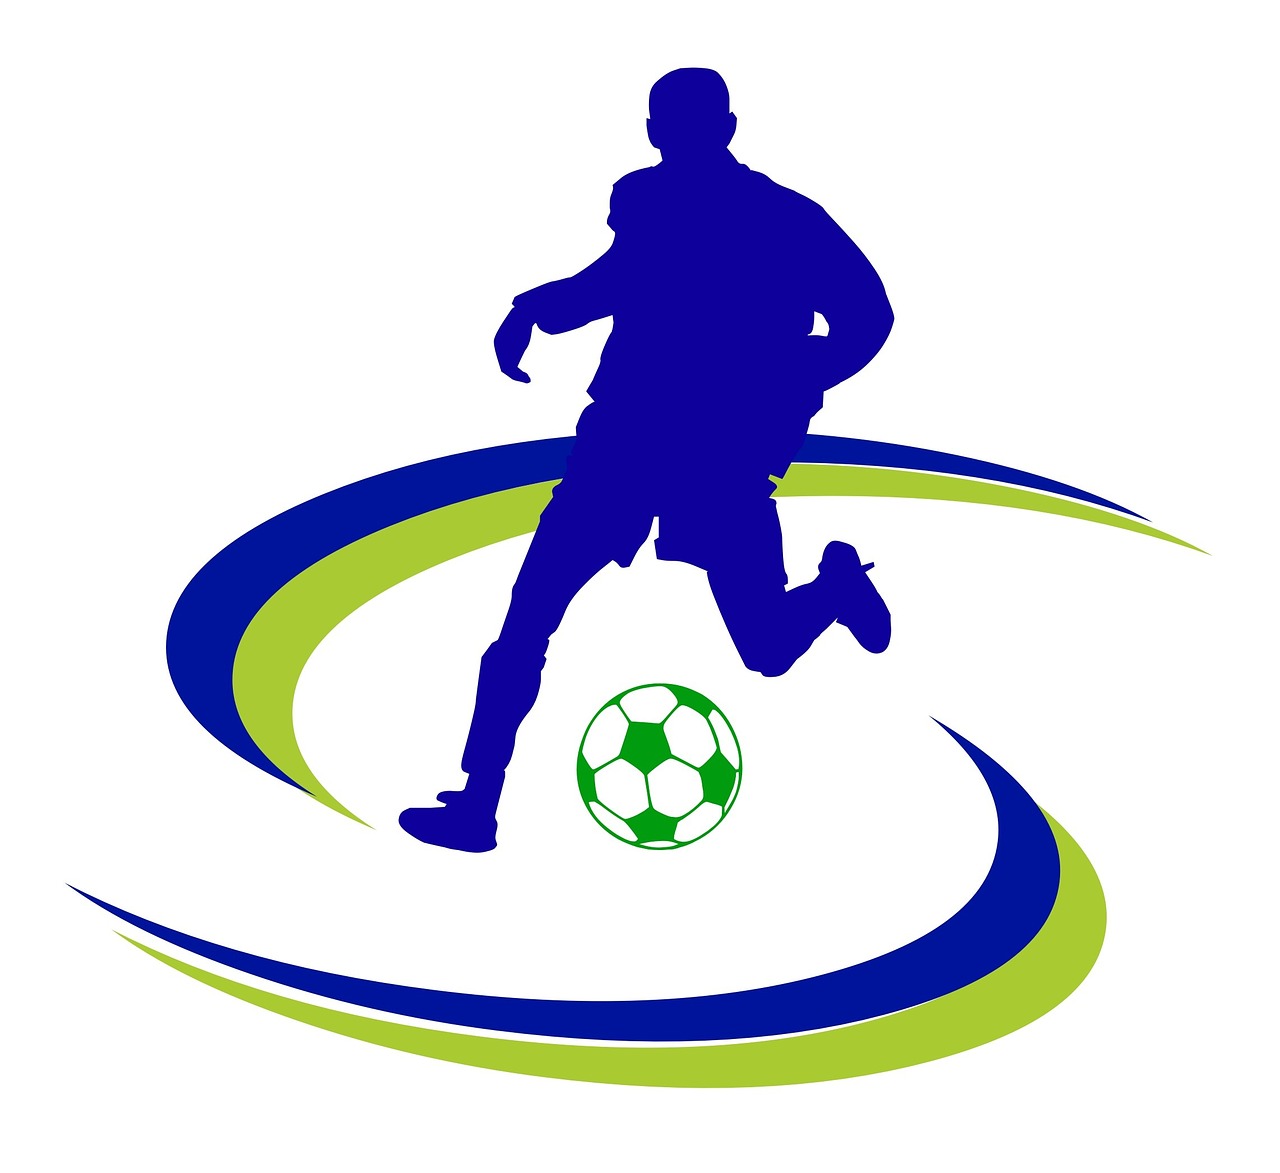 Download free photo of Soccer,sport,icon,logo,design - from needpix.com